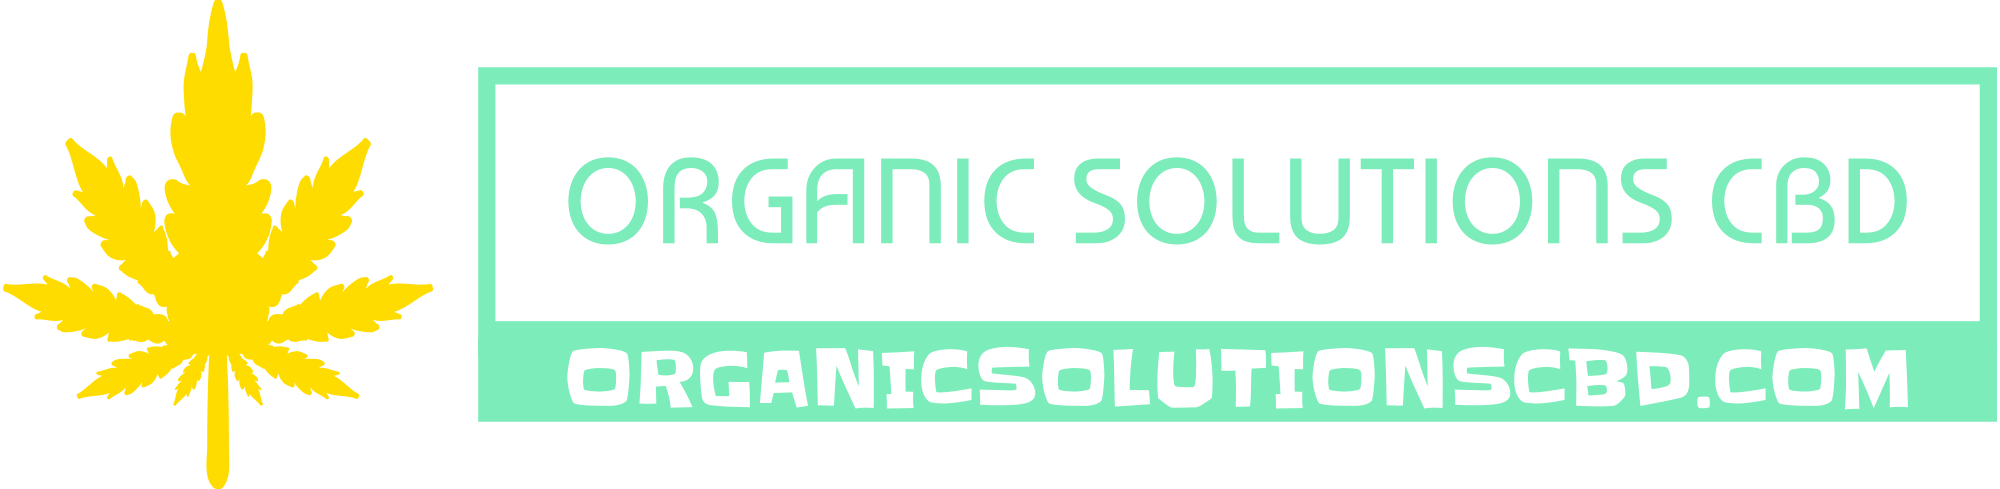 organicsolutionscbd